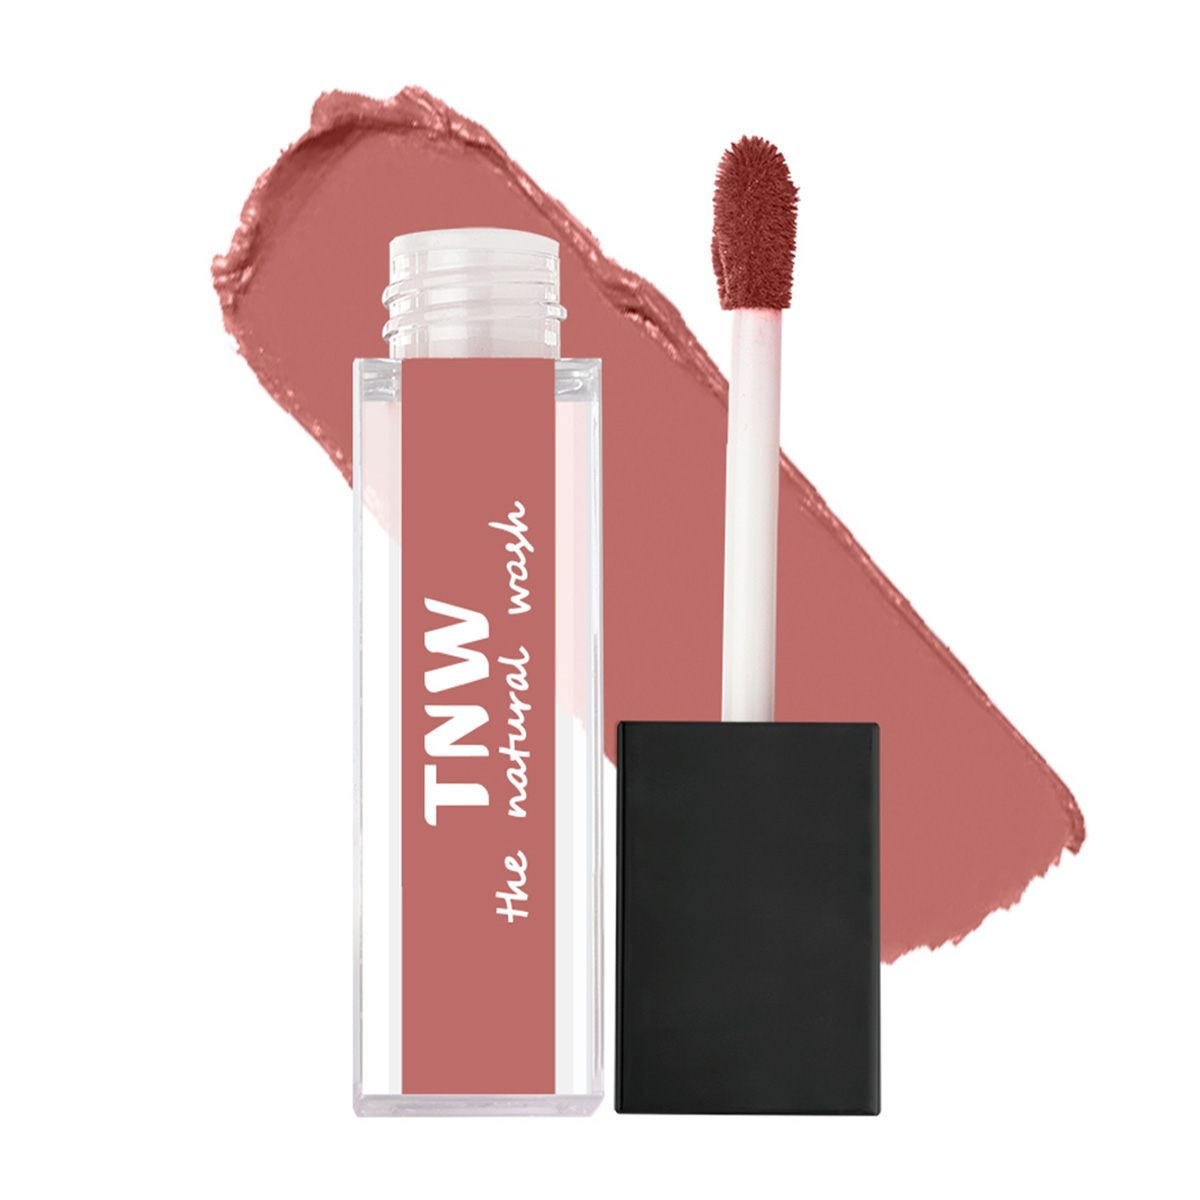 TNW - The Natural Wash Matte Velvet Longstay Liquid Lipstick Mini, 08 - Pretty Peach - Peachy Nude, 1.2ml